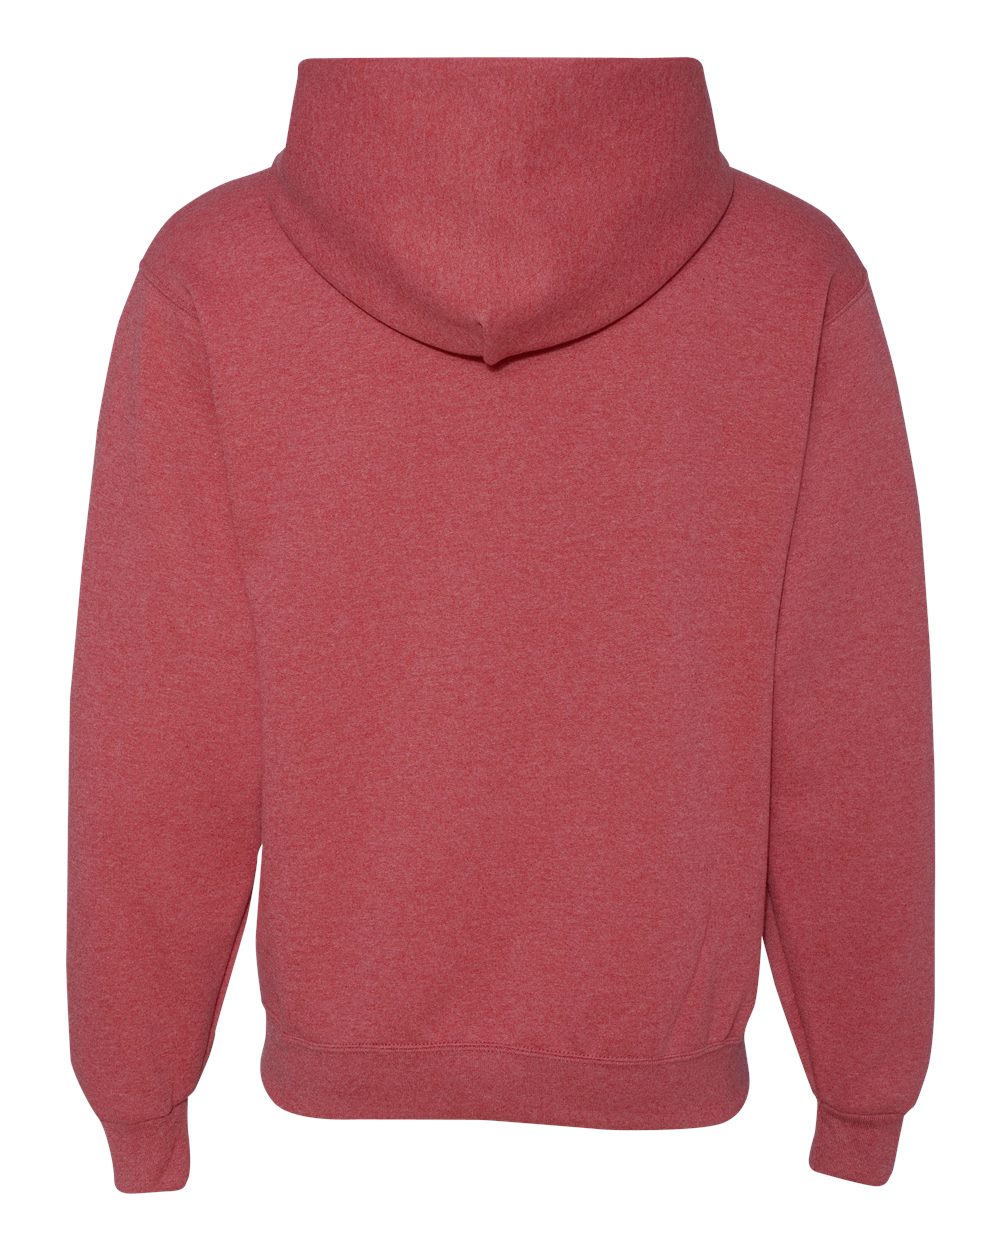 JERZEES NuBlend® Hooded Sweatshirt 996MR #color_Vintage Heather Red